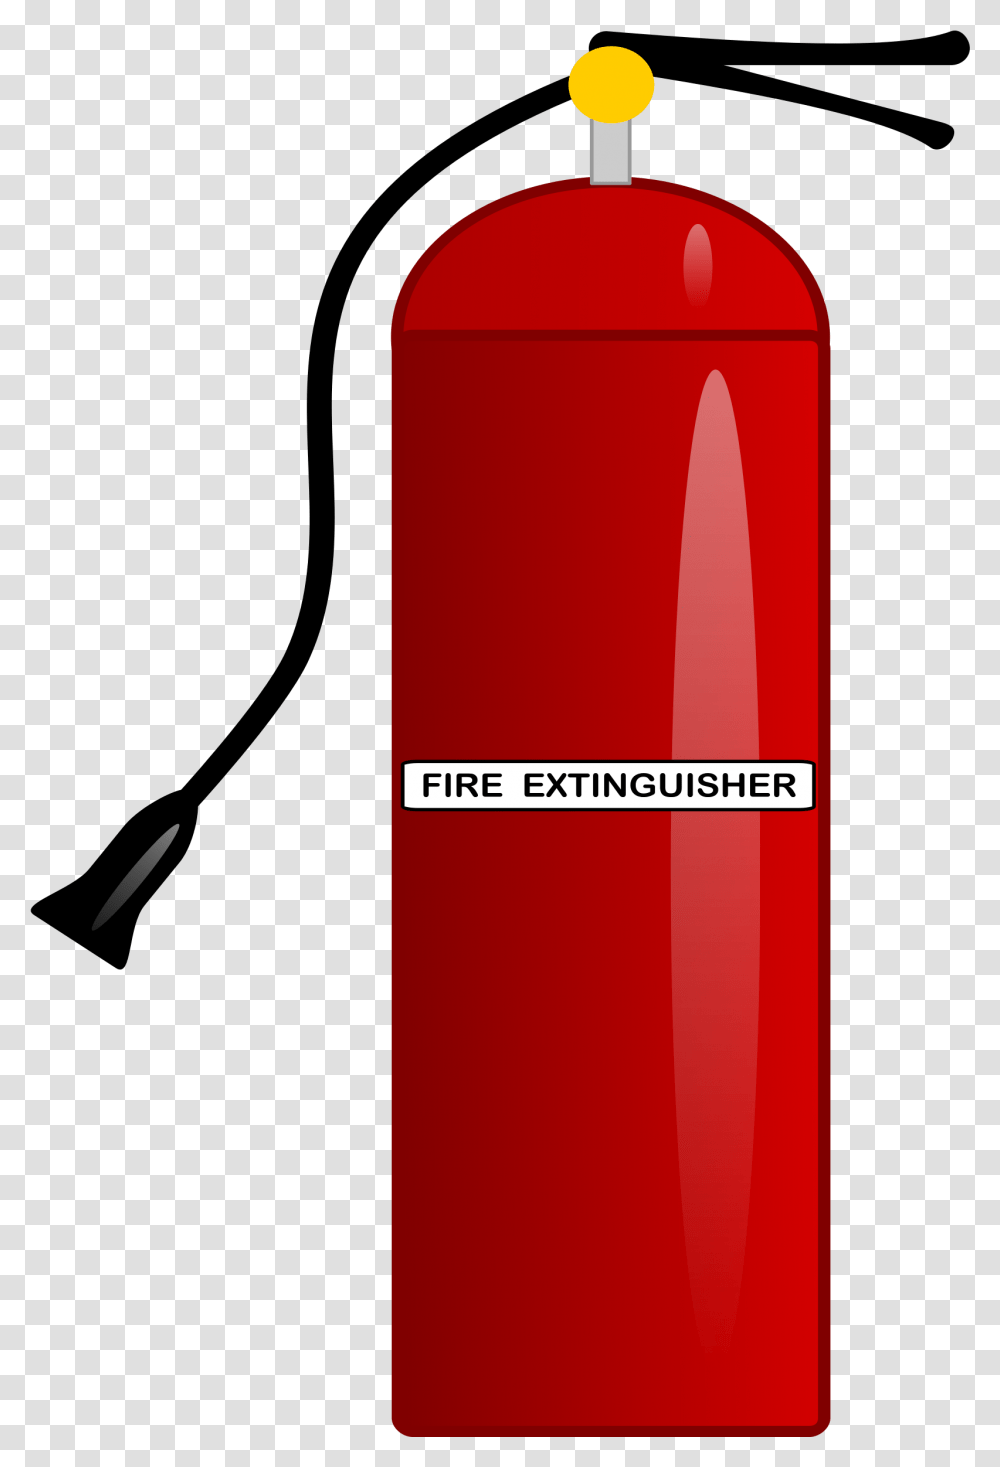 Extinguisher Images Free Download Fire Extinguisher, Bottle, Beverage, Alcohol, Gas Pump Transparent Png